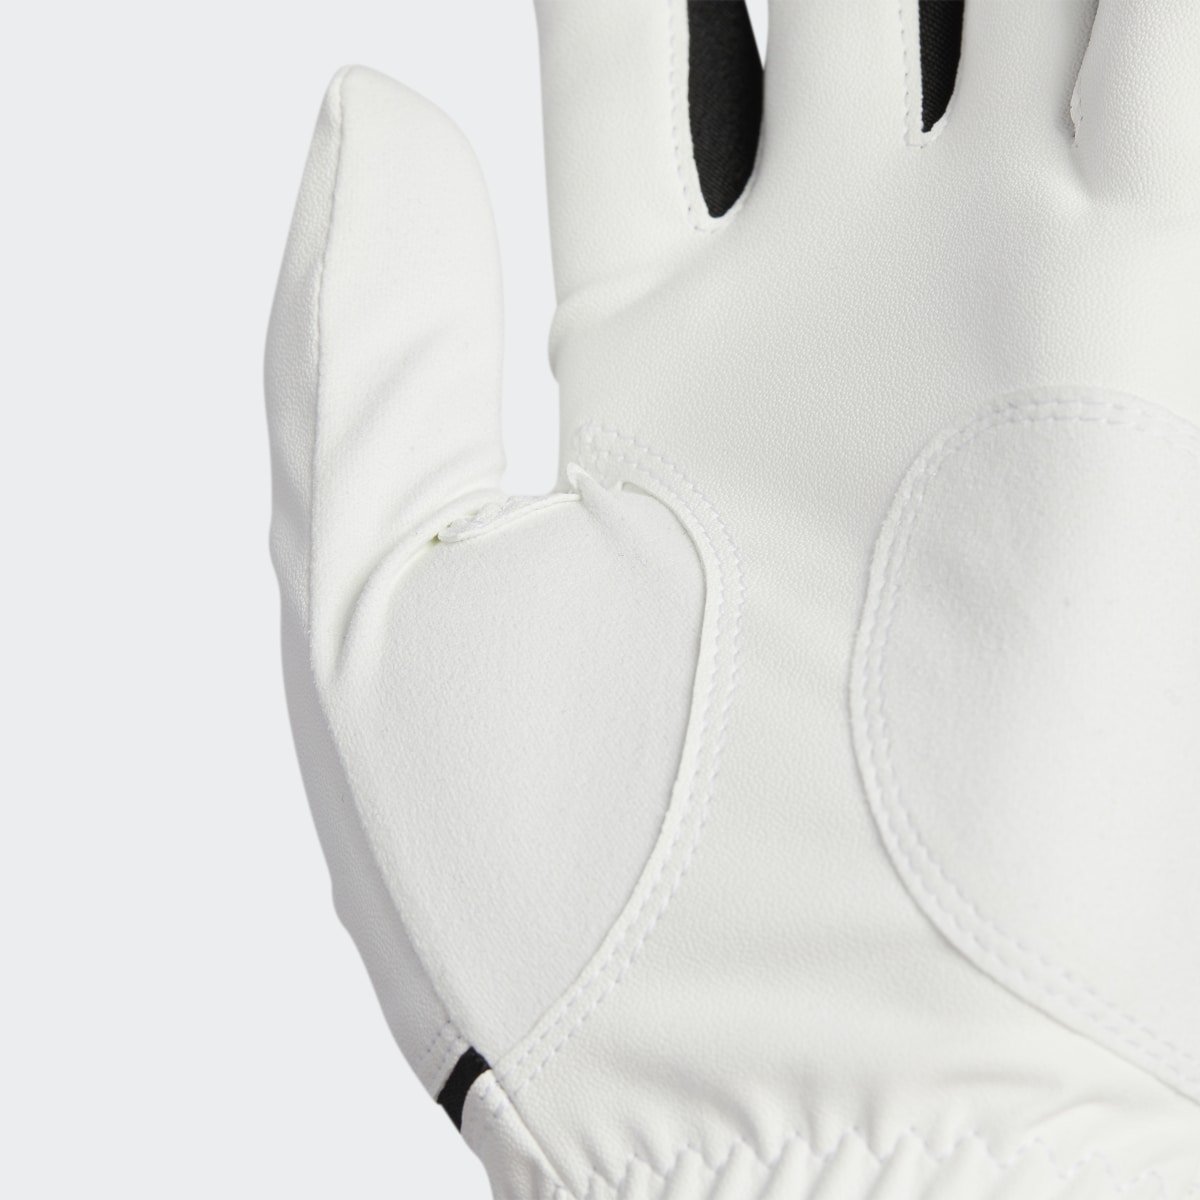 Adidas Guanto aditech 22 Glove. 5